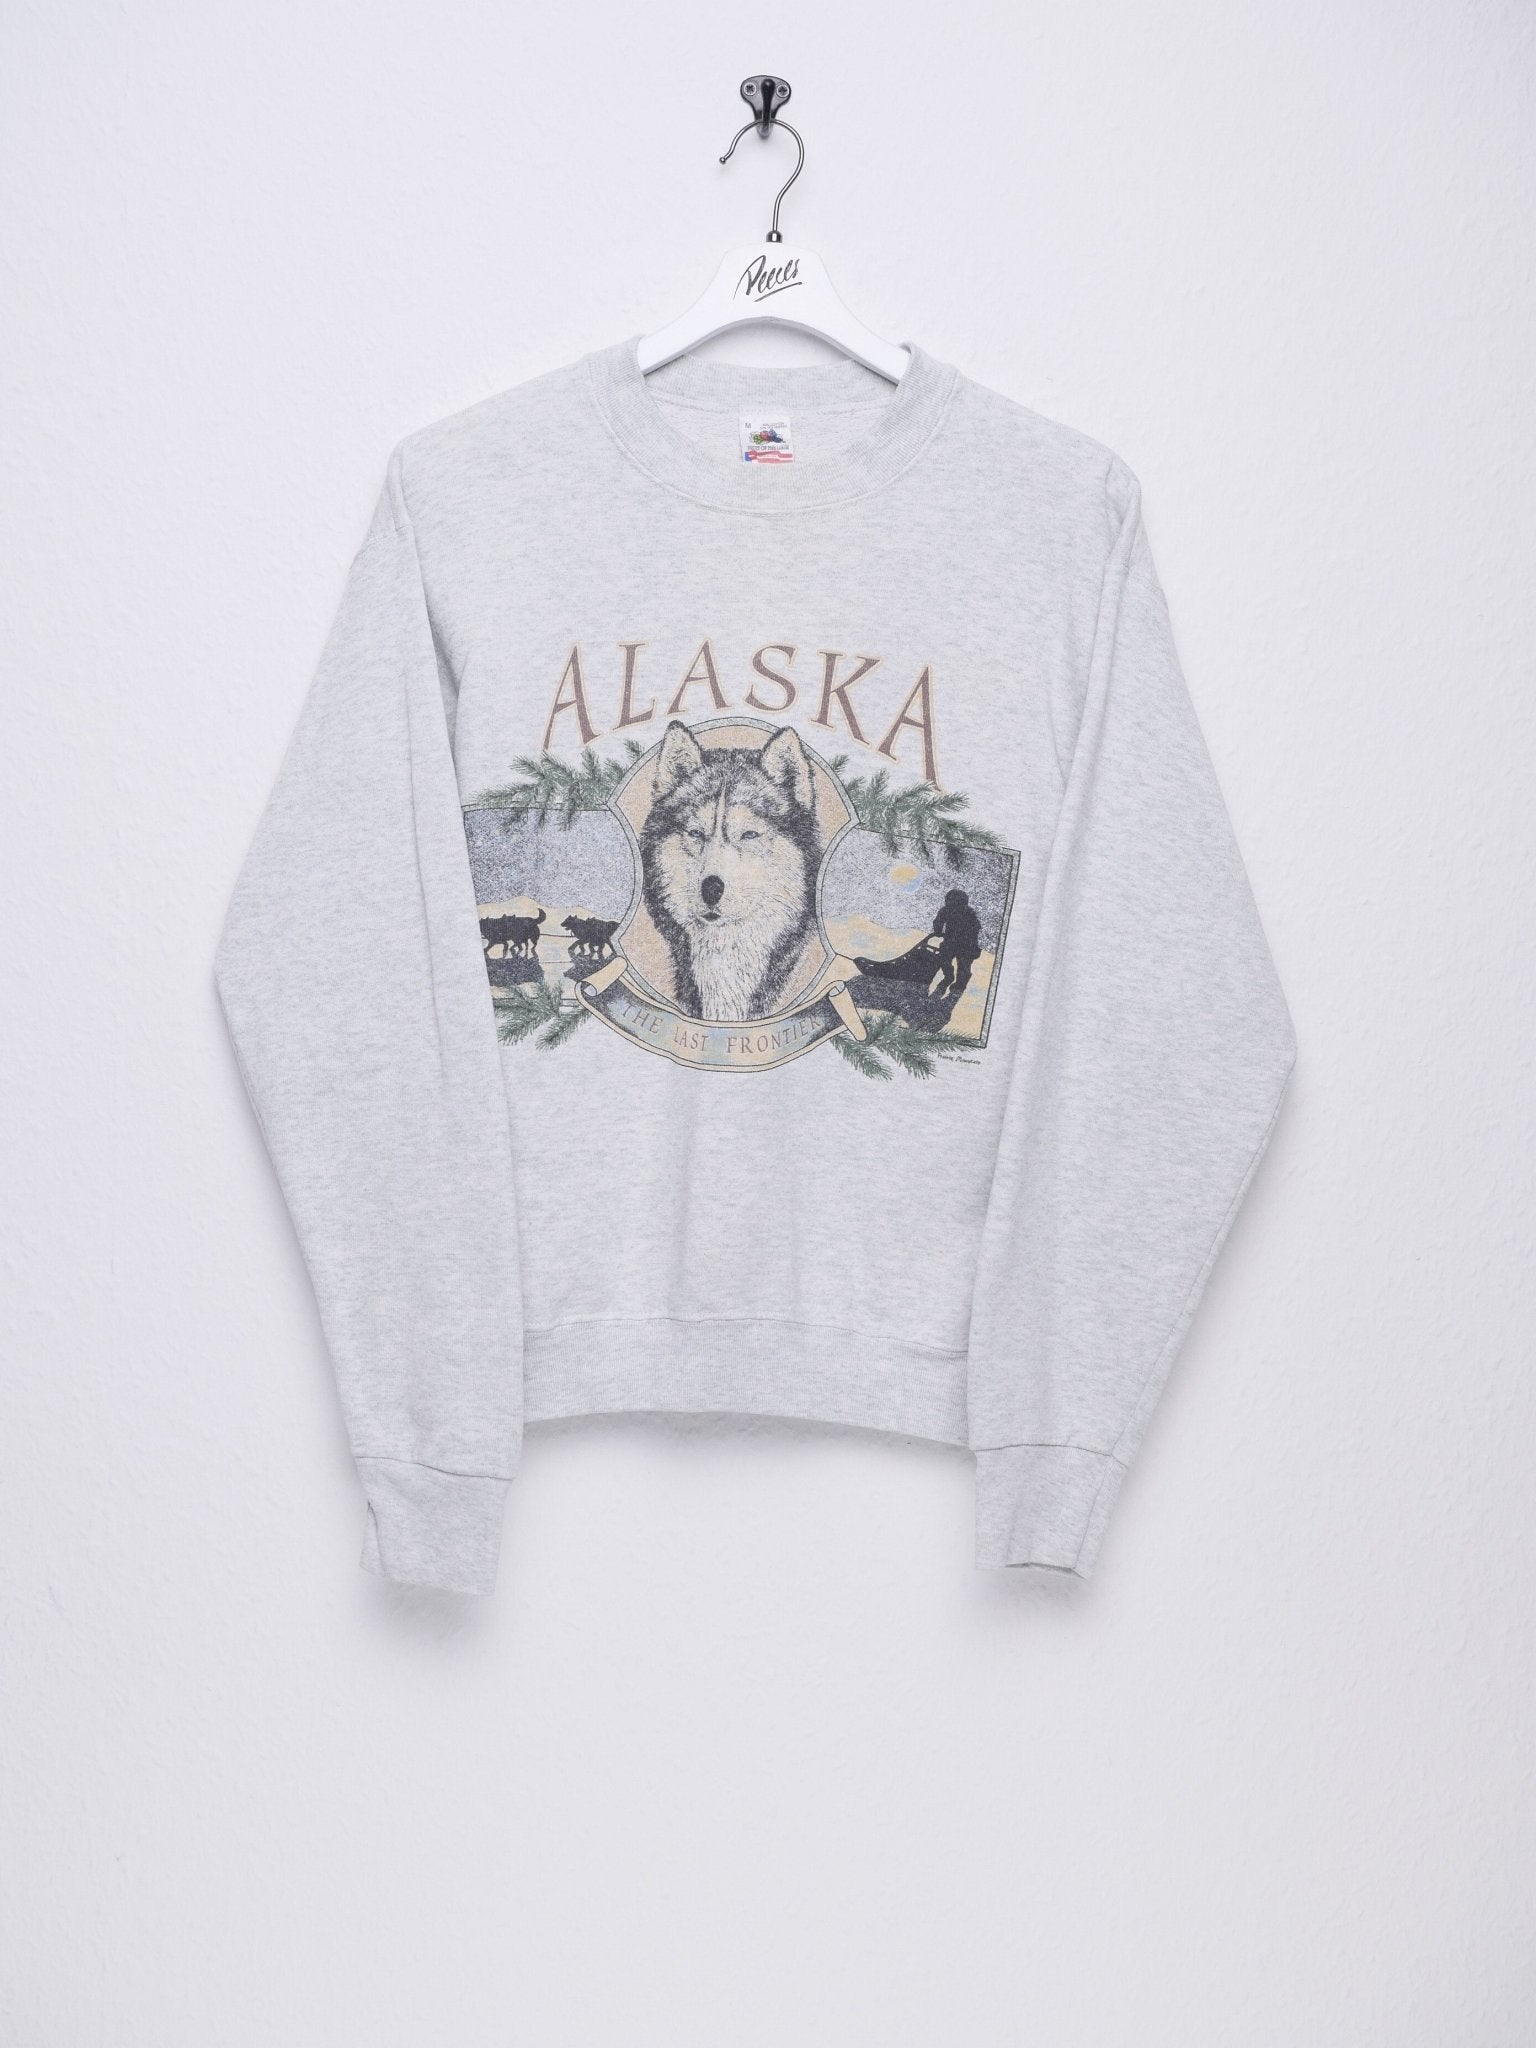 printed Alaska Spellout Vintage Sweater - Peeces